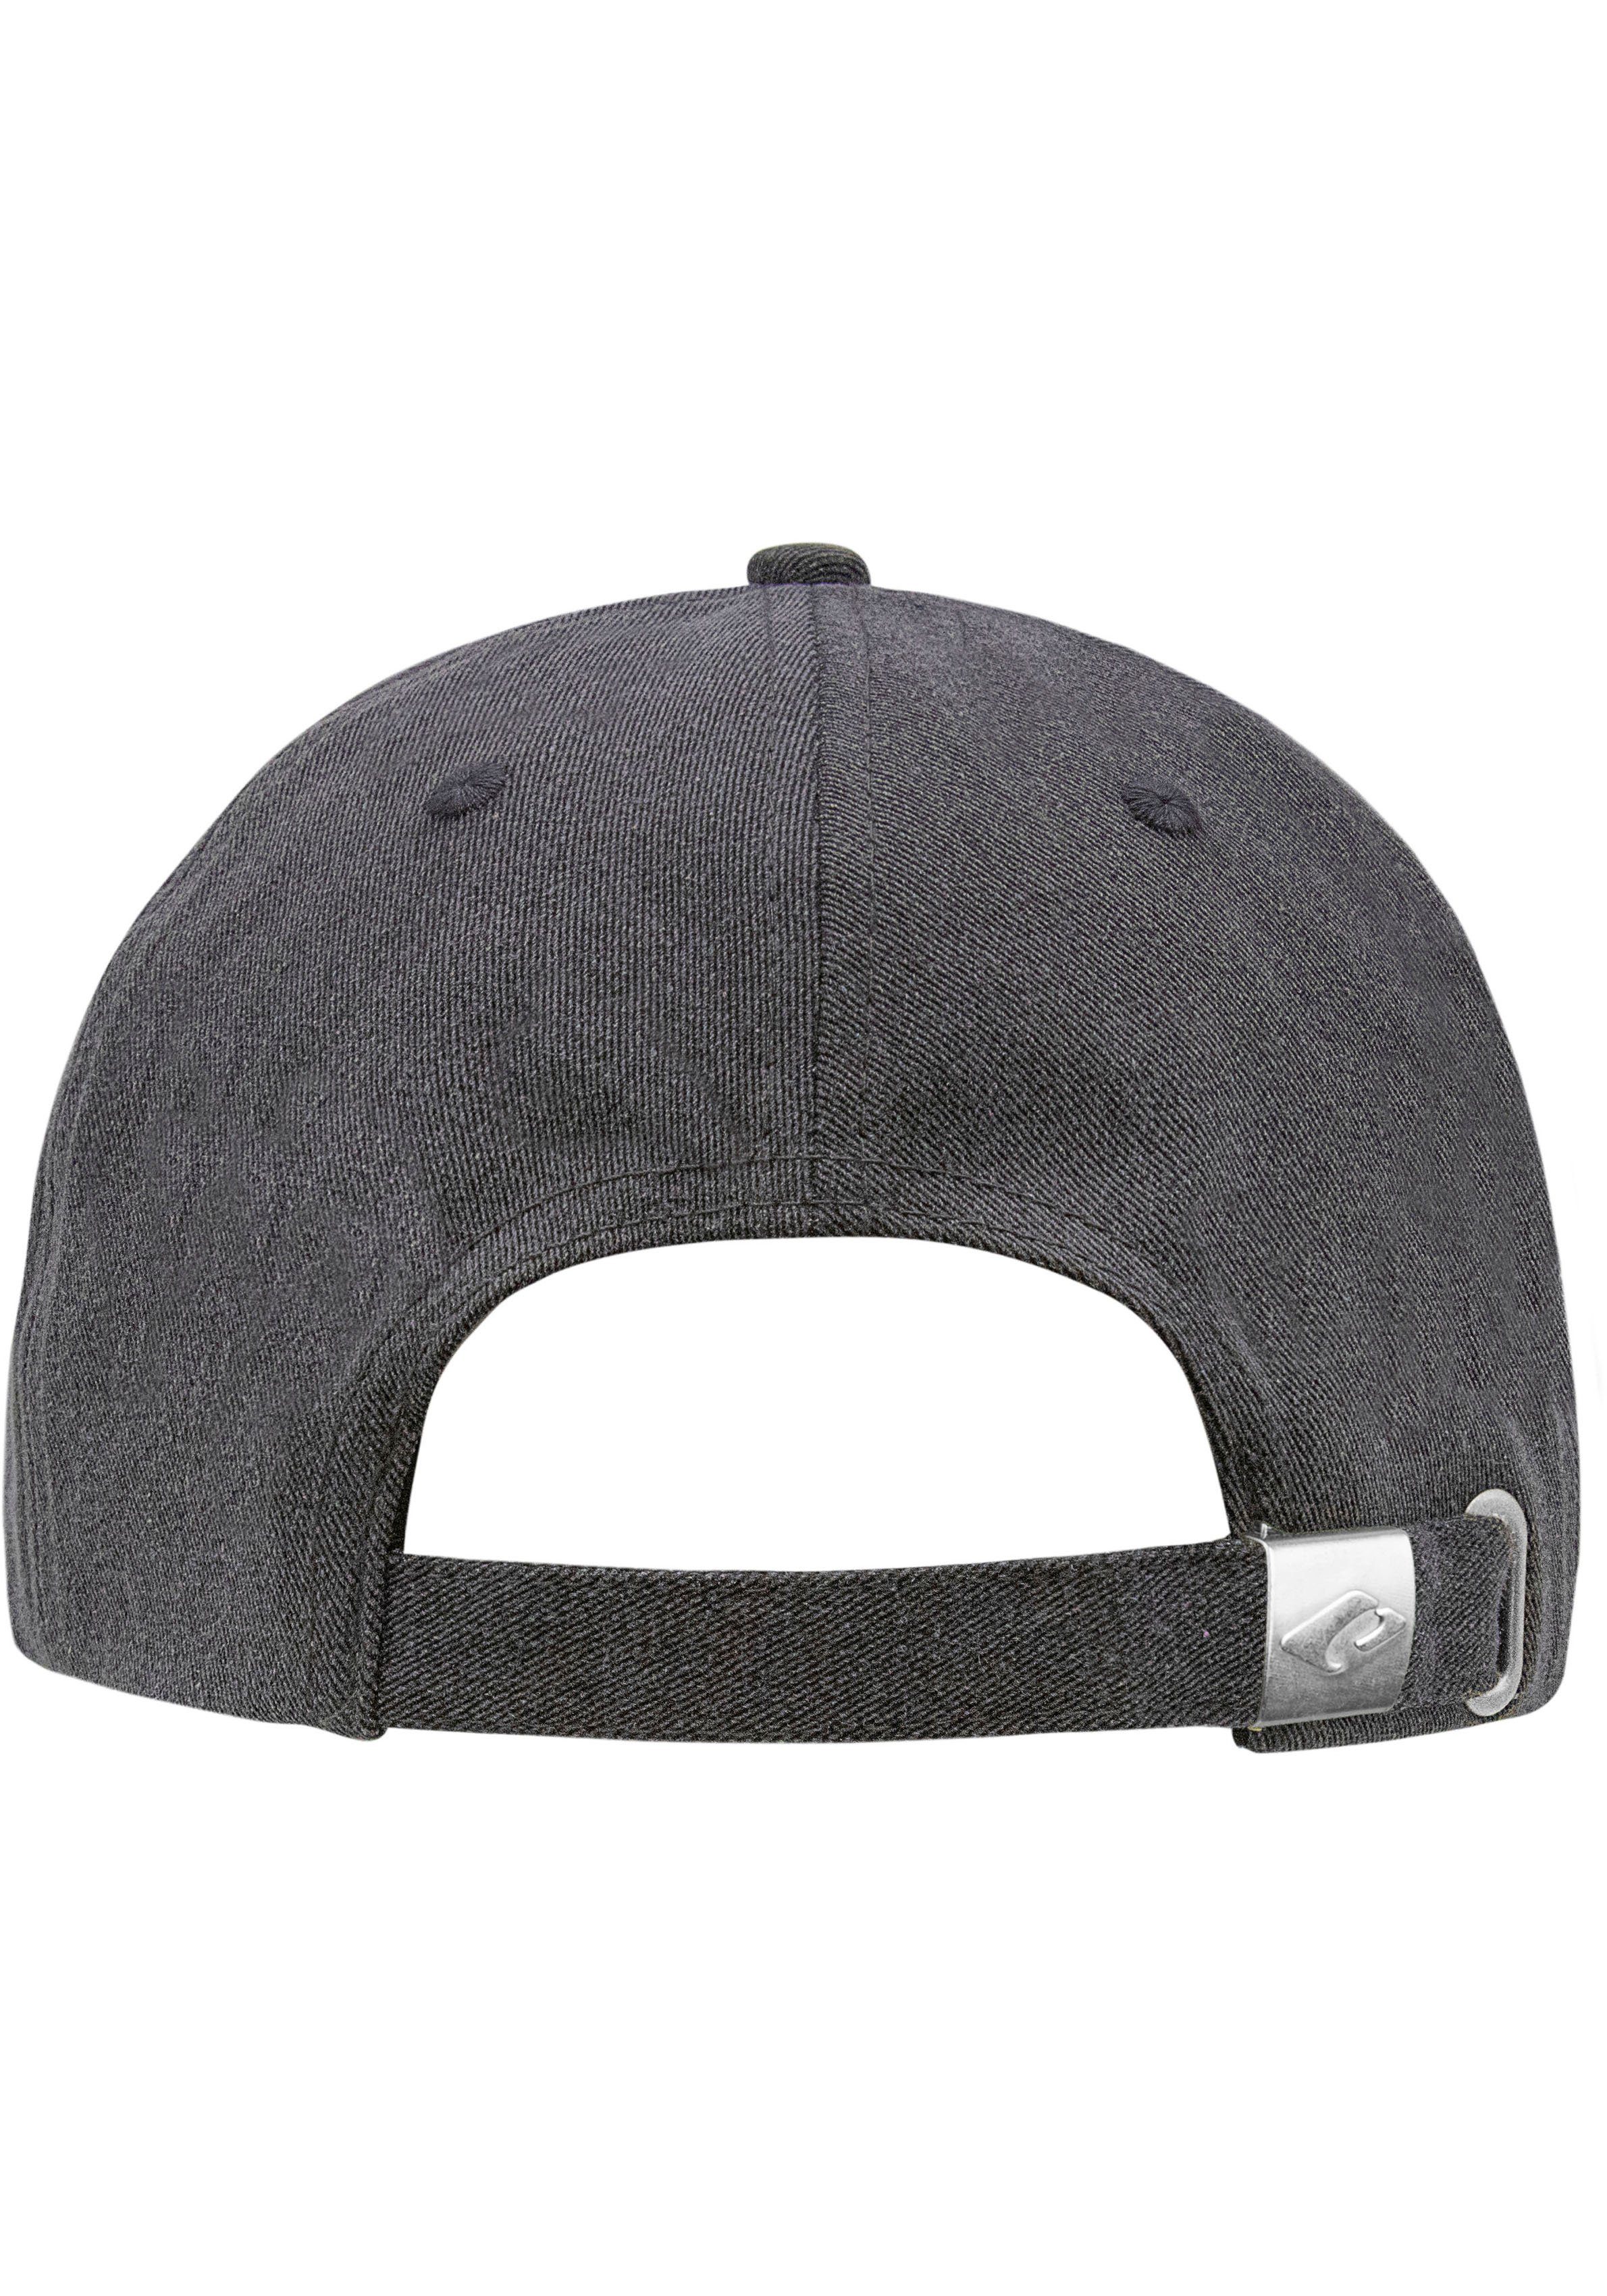 Baseball dunkelgrau Cap Arklow Hat chillouts